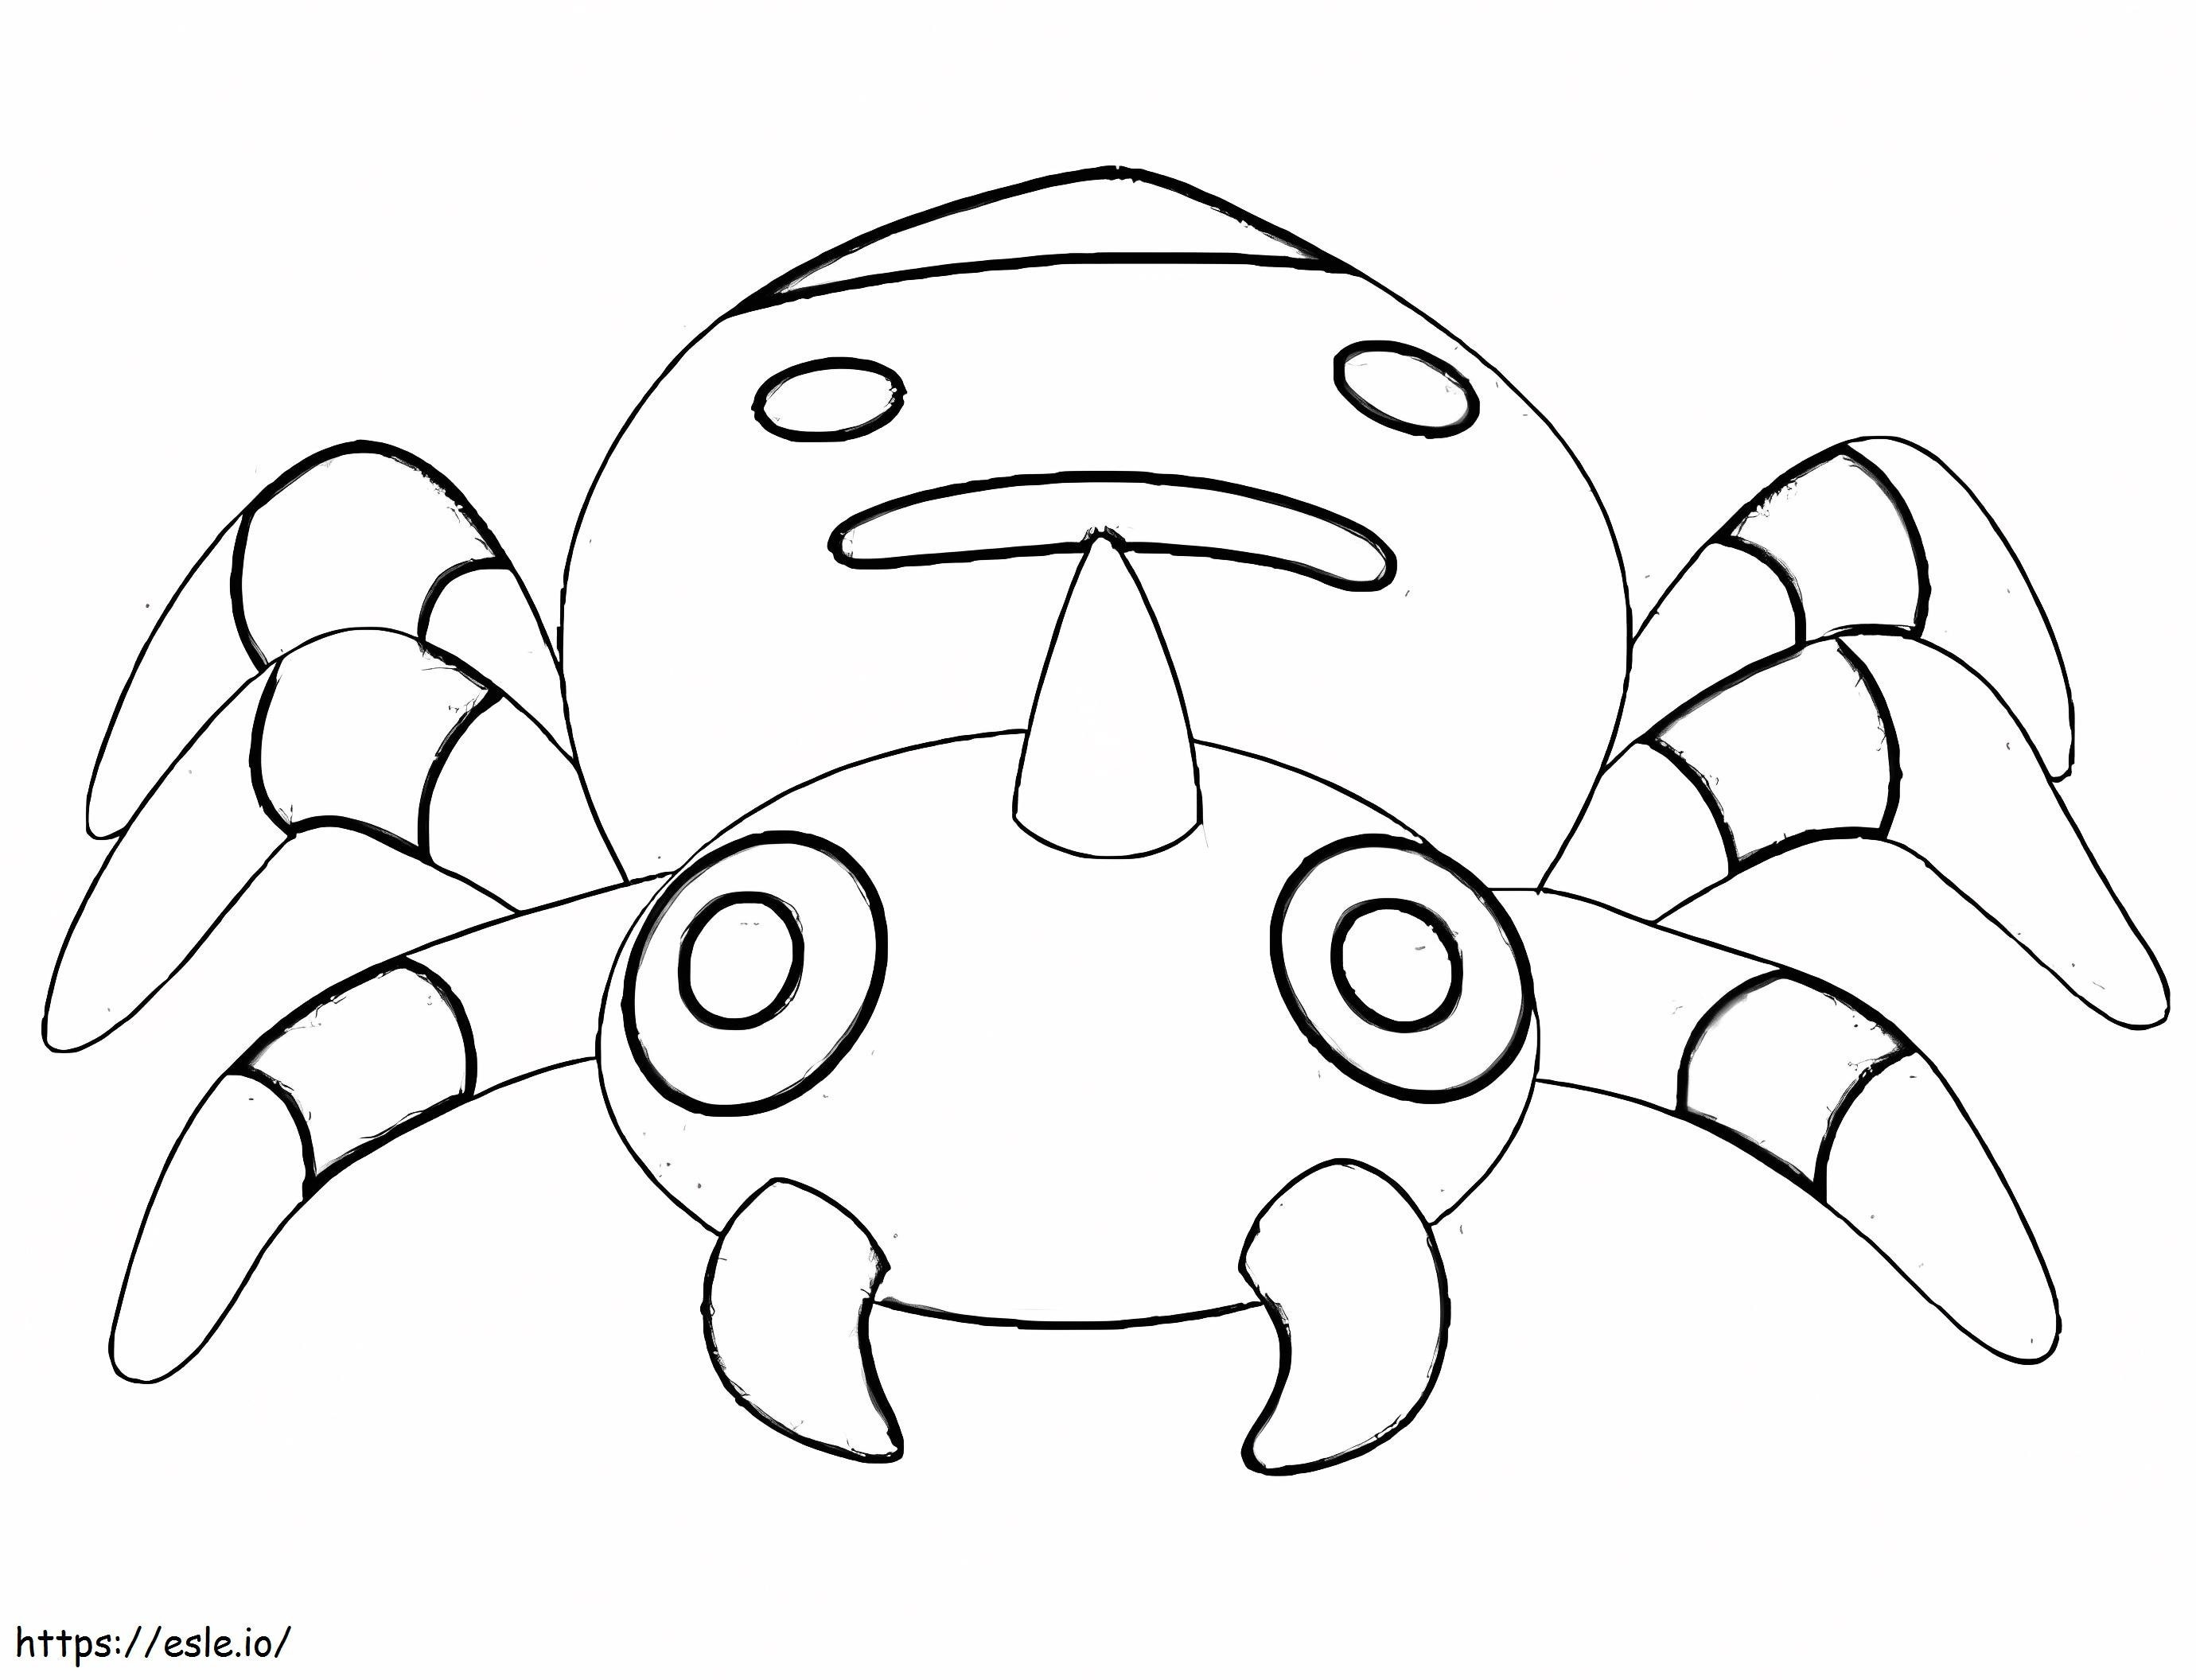 Coloriage Pokémon Spinarak 2 à imprimer dessin